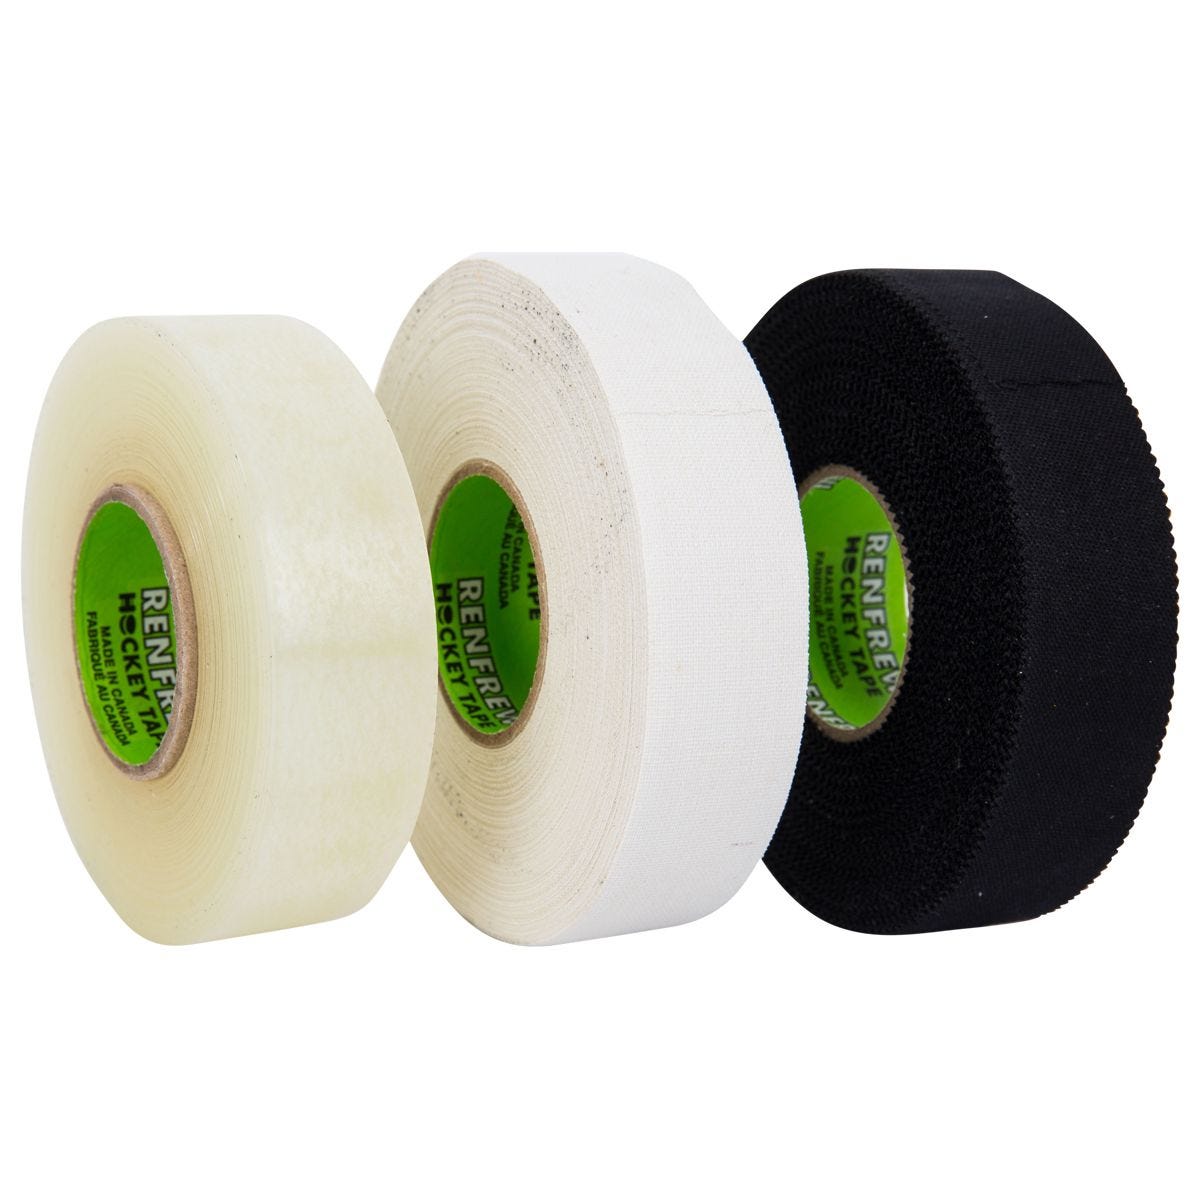 Renfrew White Cloth Hockey Tape - 3 Pack